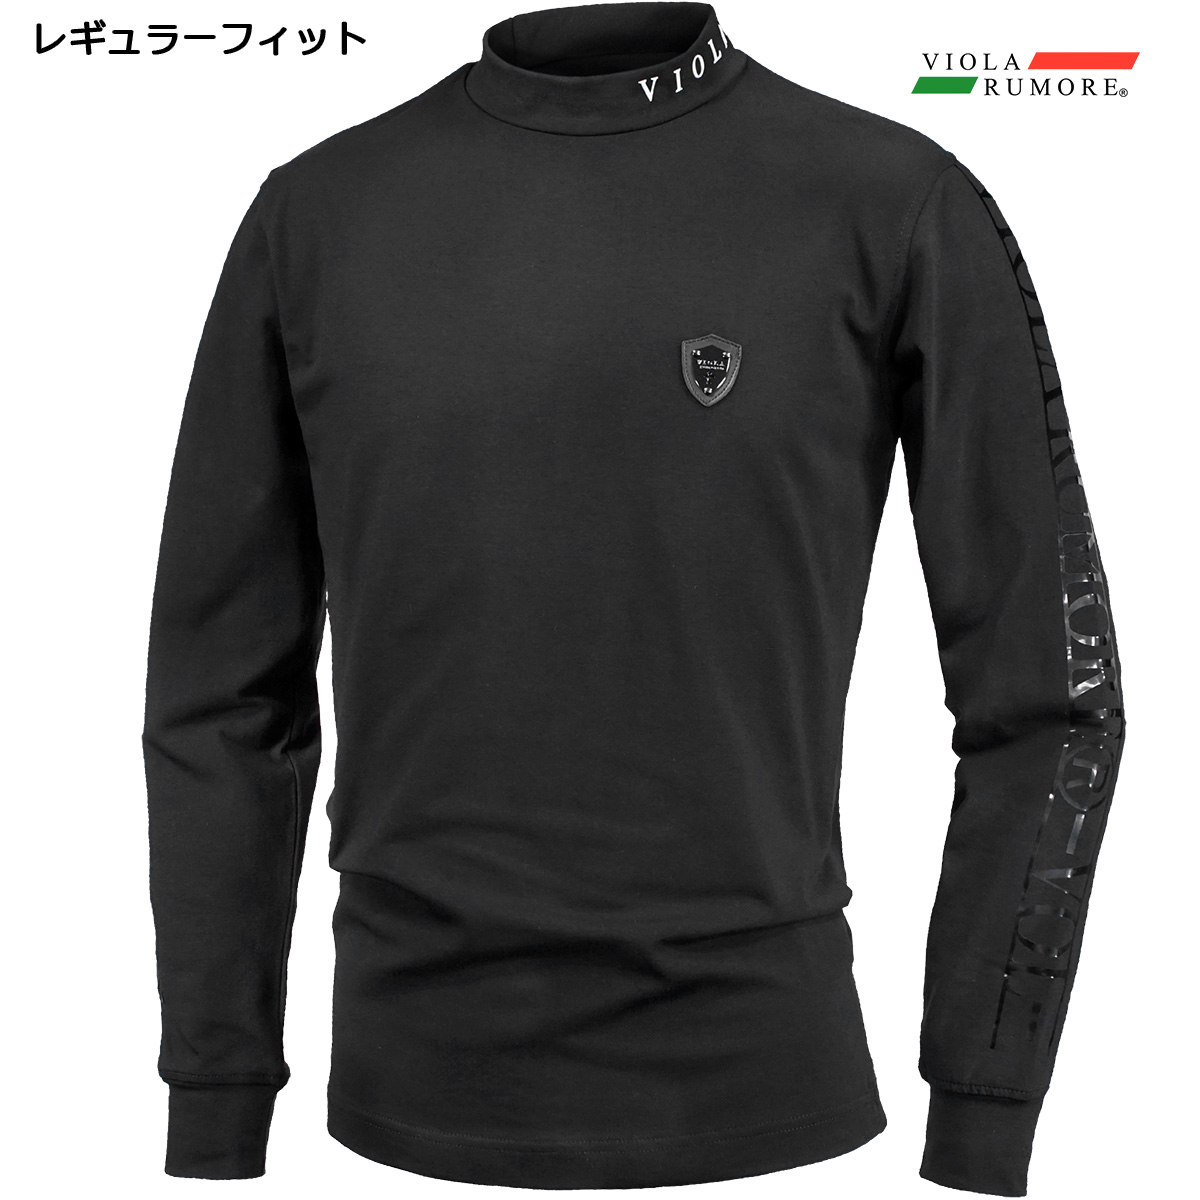 VIOLA rumore ヴィオラ ビオラ Tシャツ 長袖 モックネック 襟ロゴ メンズ mens(ブラック黒) 42200